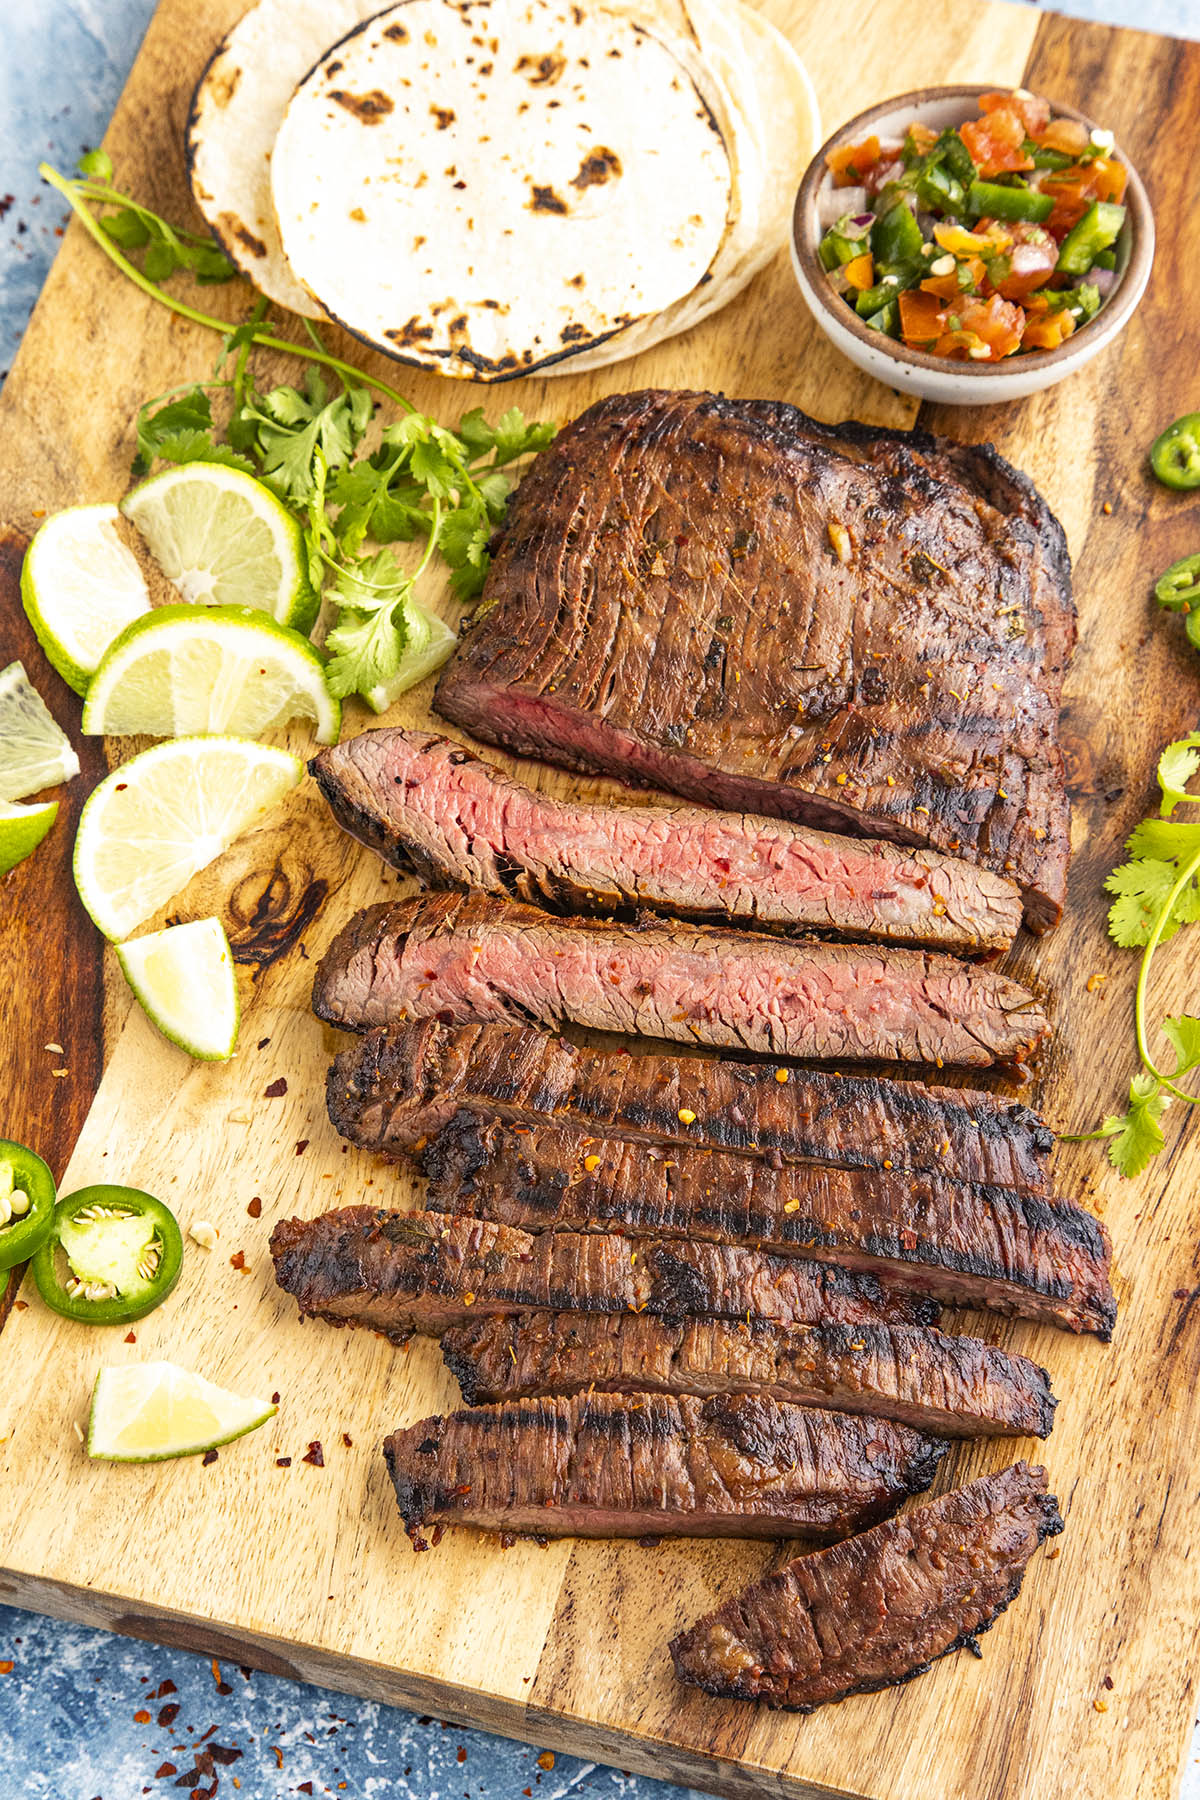 Try This Carne Asada Recipe for Restaurant-Quality Steak!